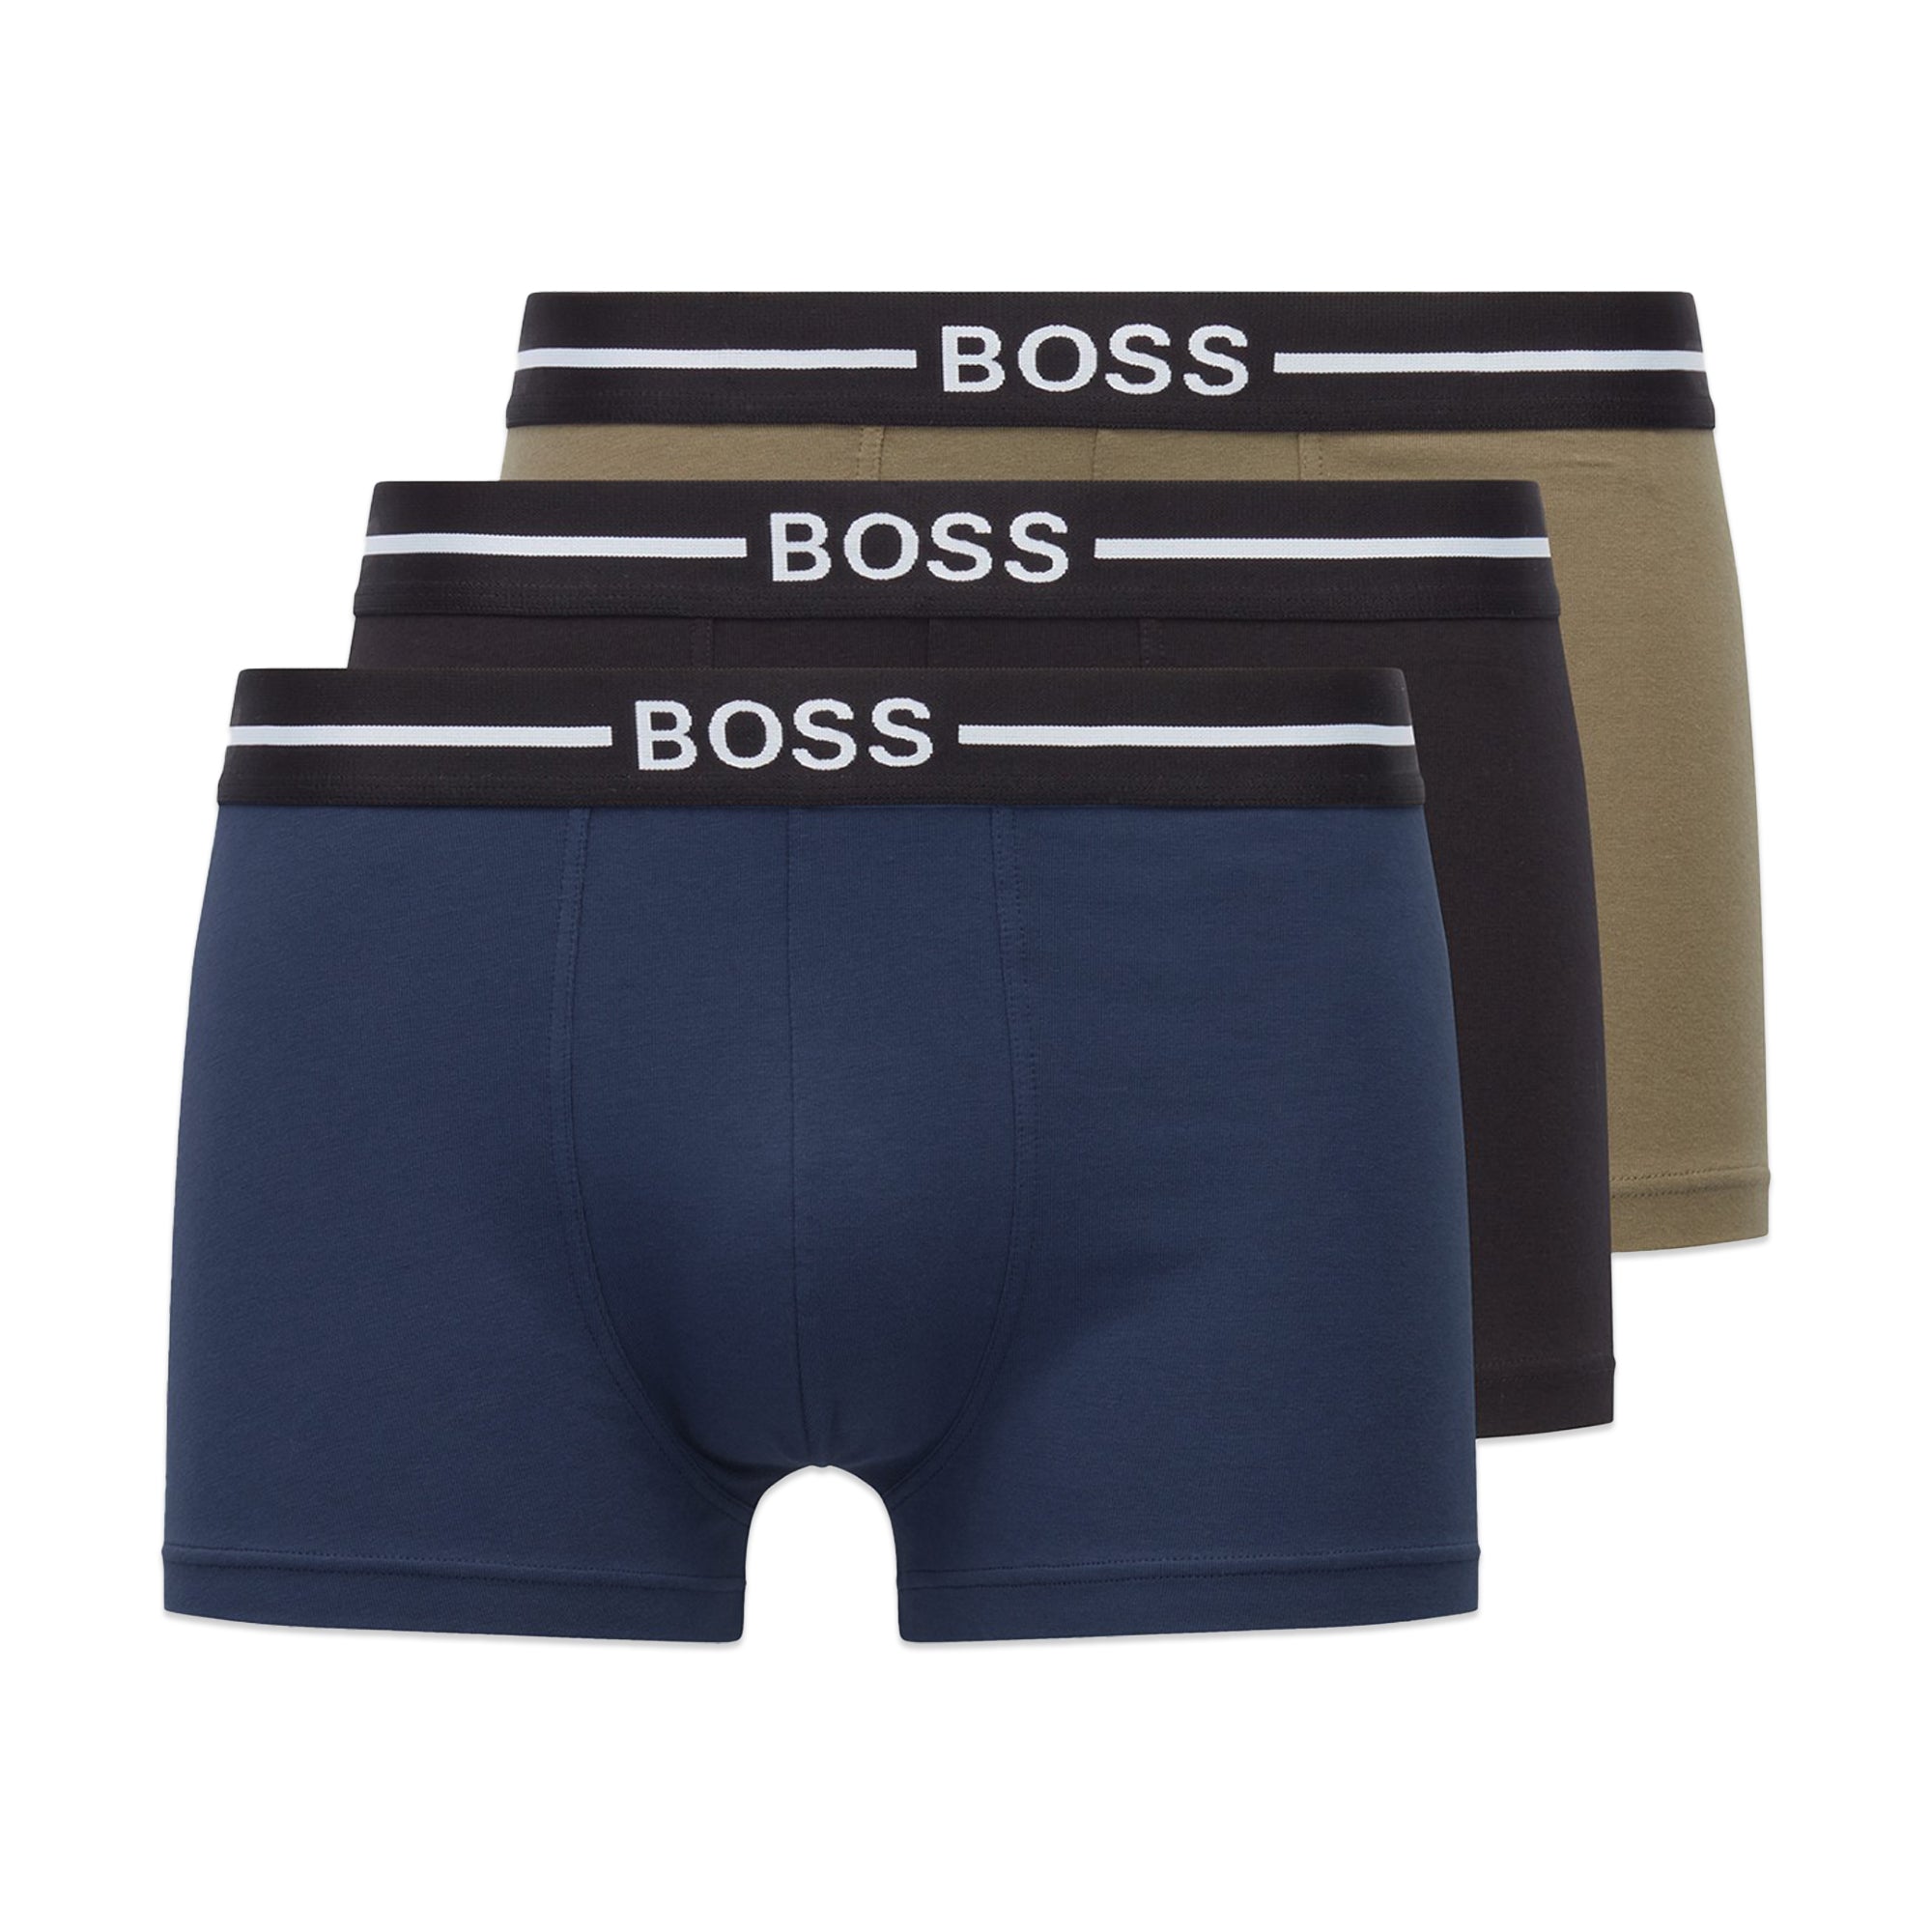 Boss 3 Pack Cotton Stretch Boxer Brief - Navy/Black/Khaki